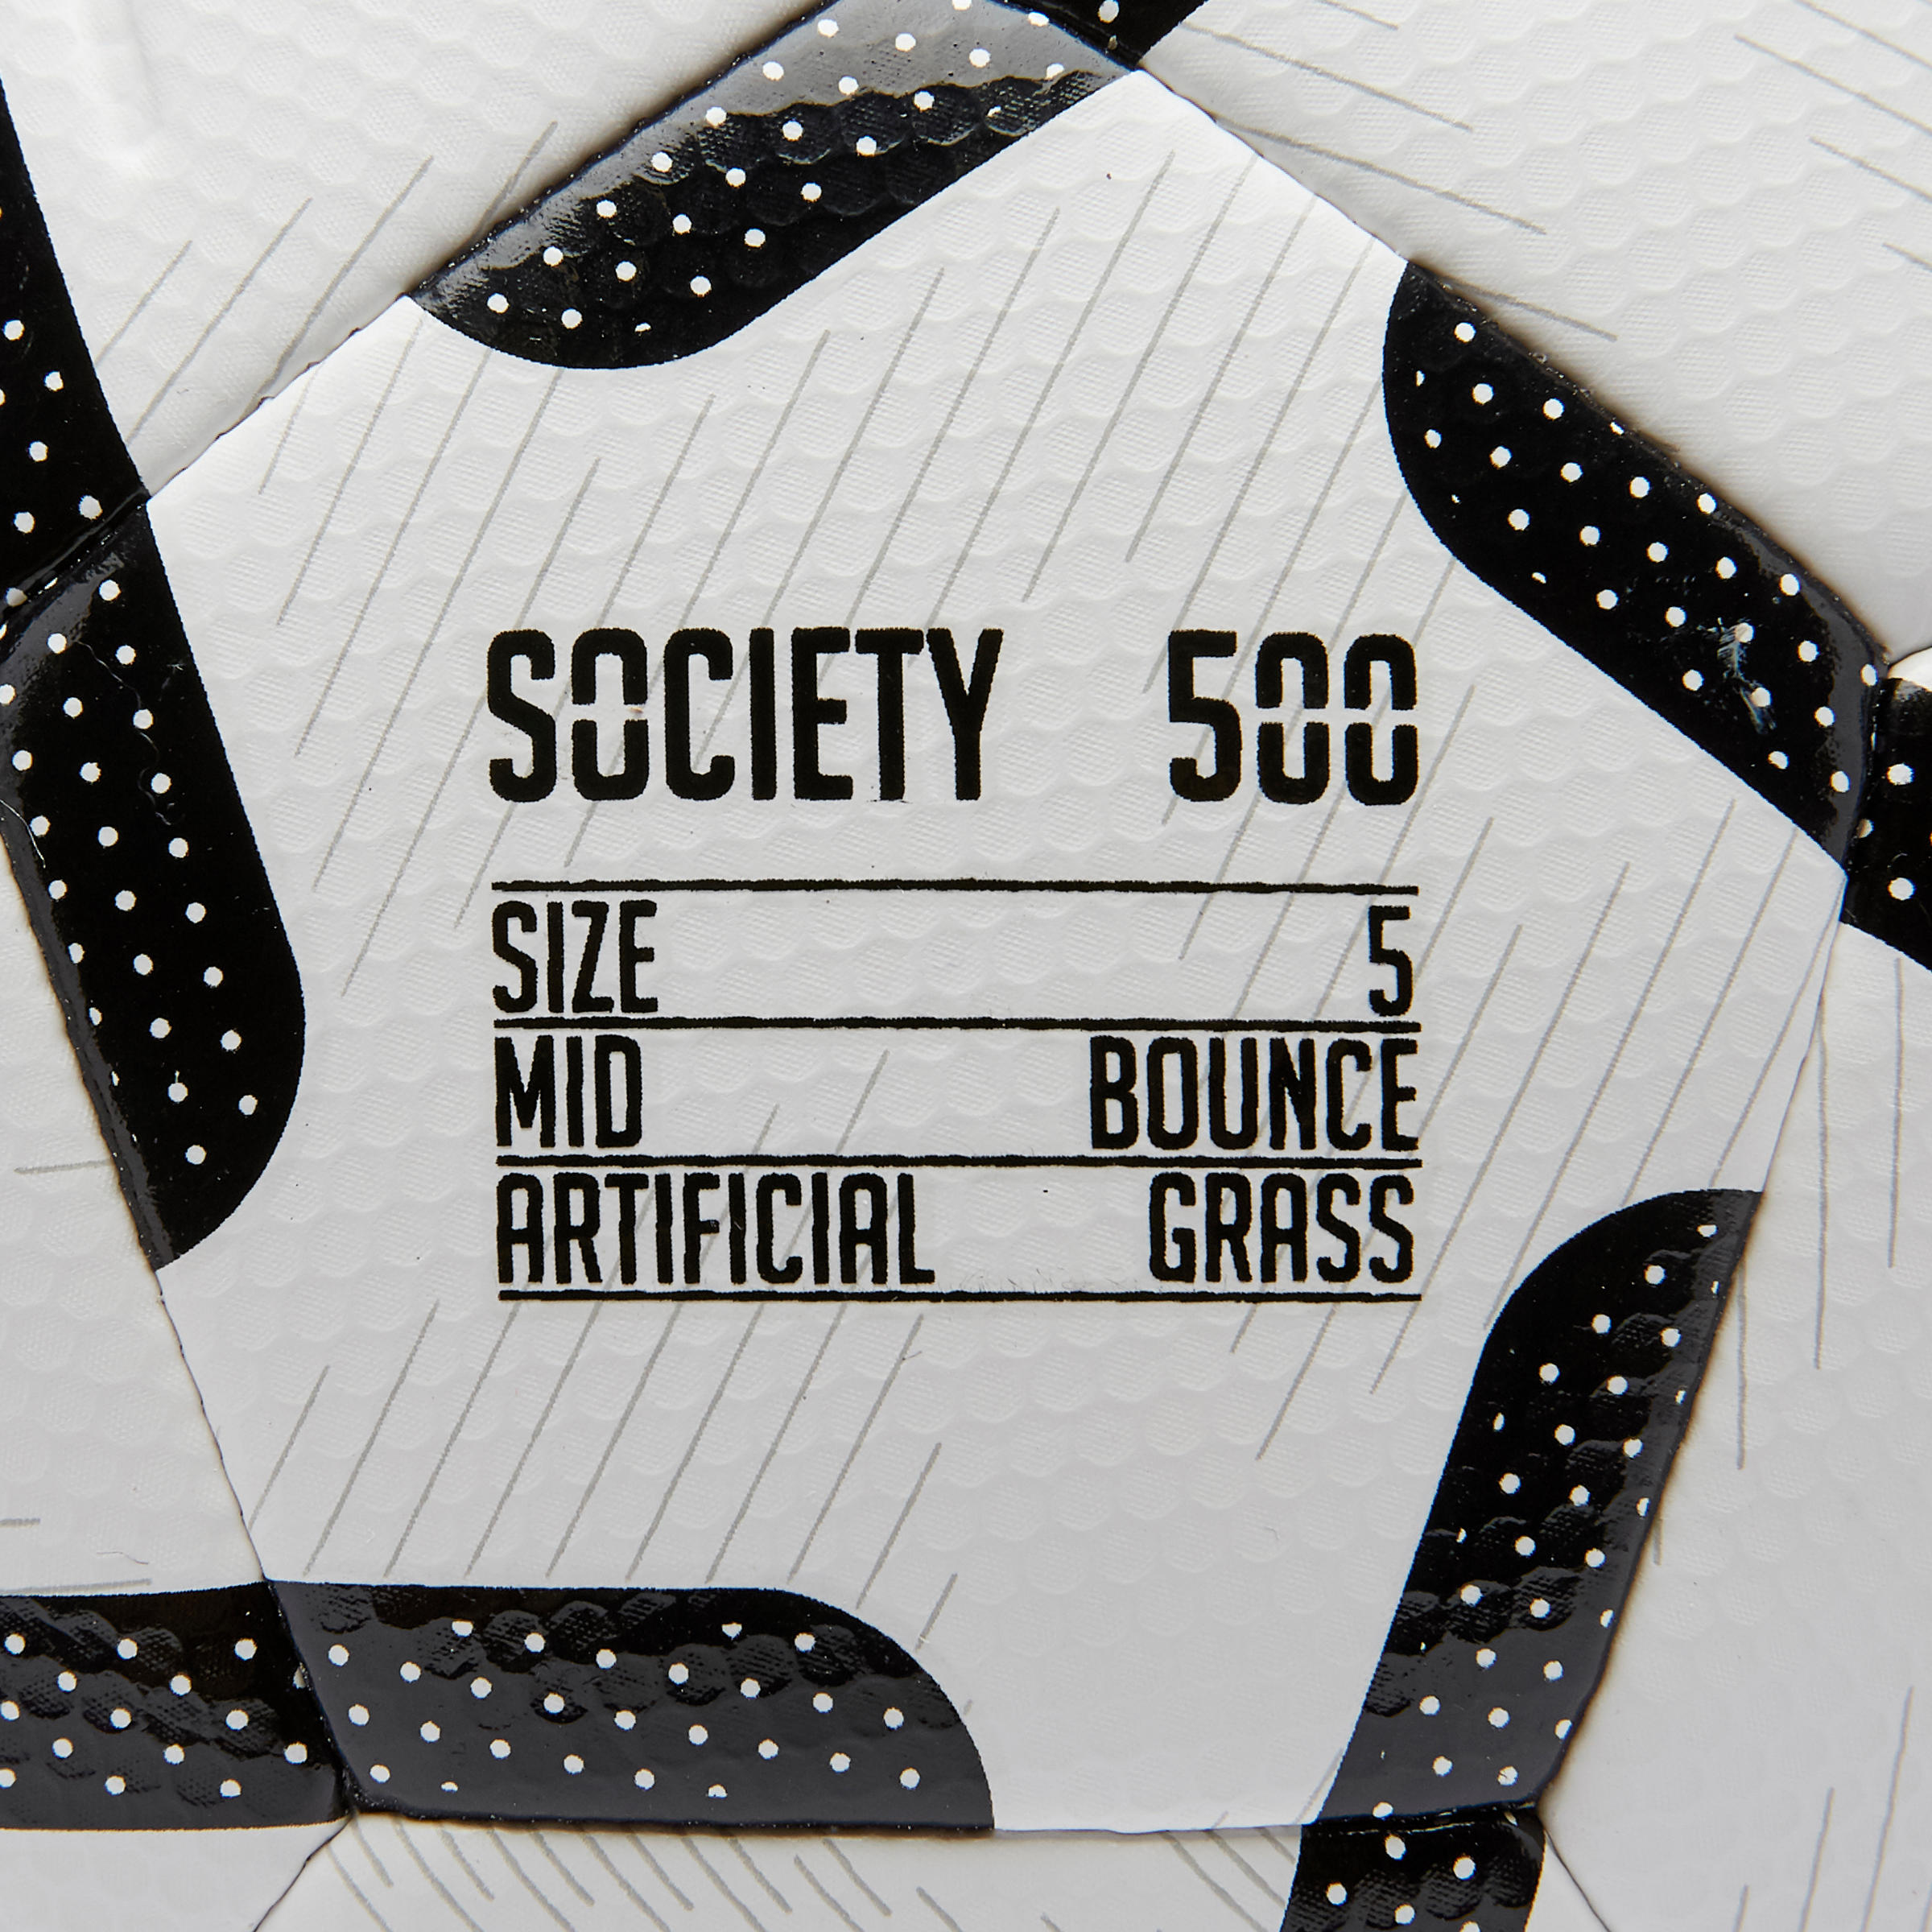 Society 500 5-A-Side Football Size 4 - Black/White 5/7